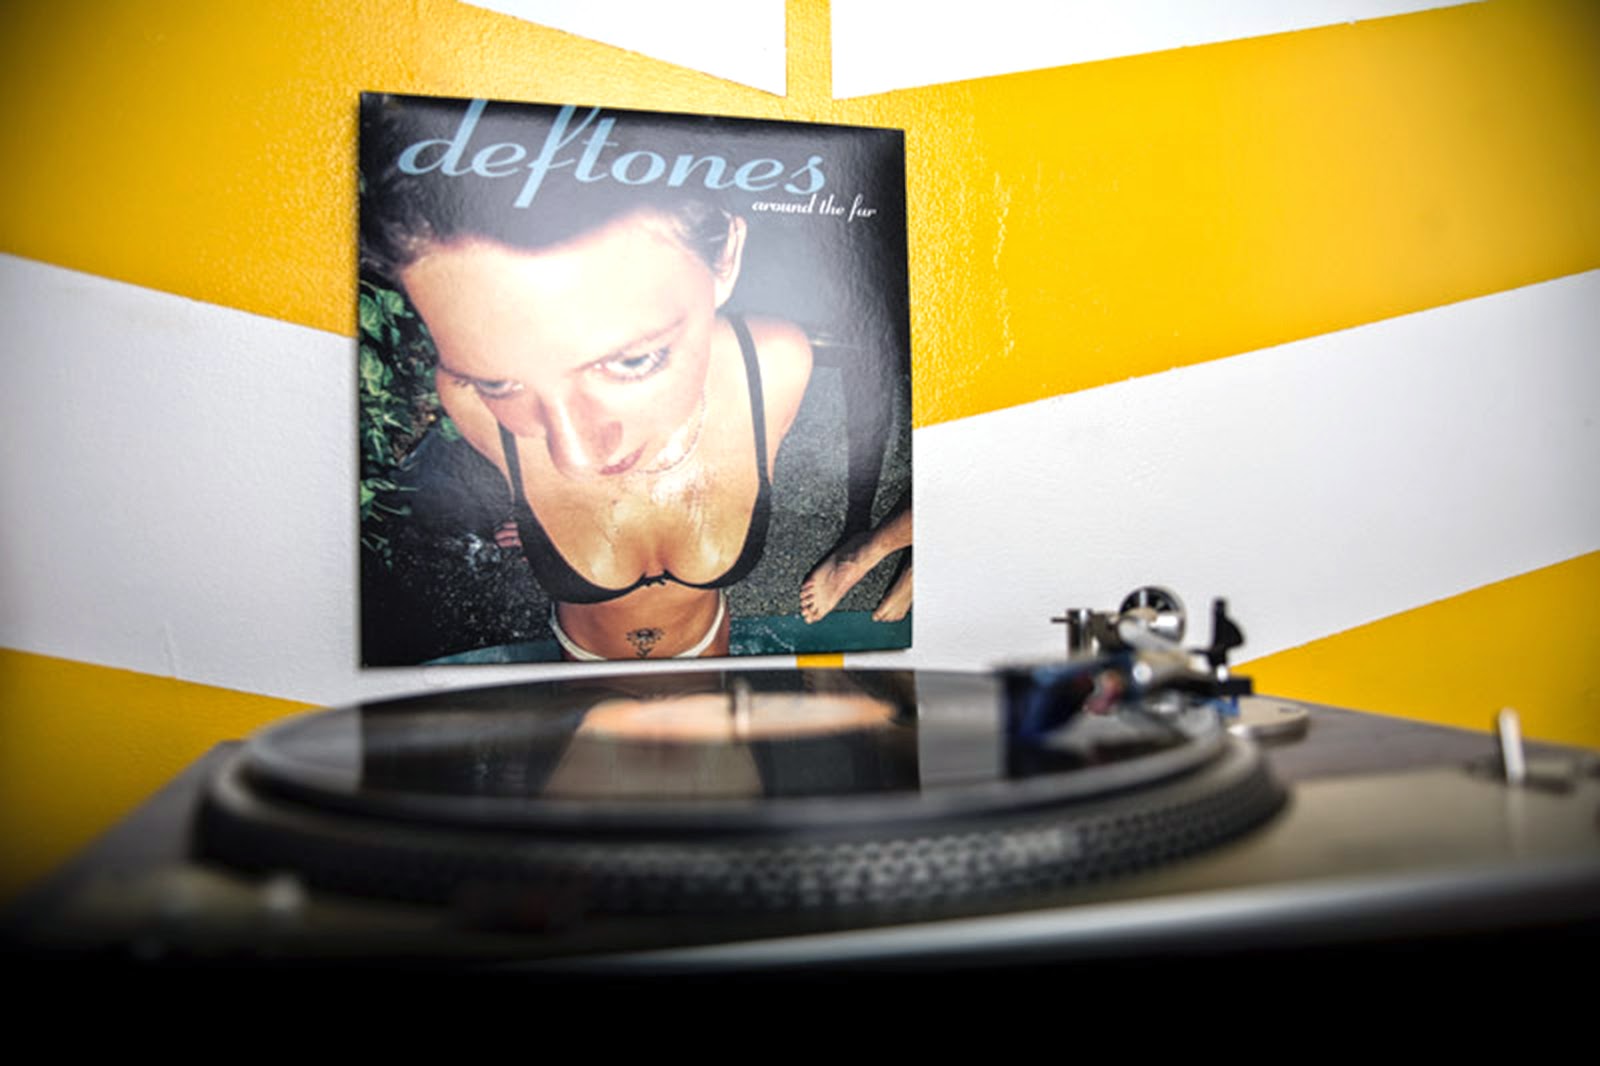 Deftones around the. Deftones обложка девушка. Deftones around the fur 1997. Deftones around the fur обложка.